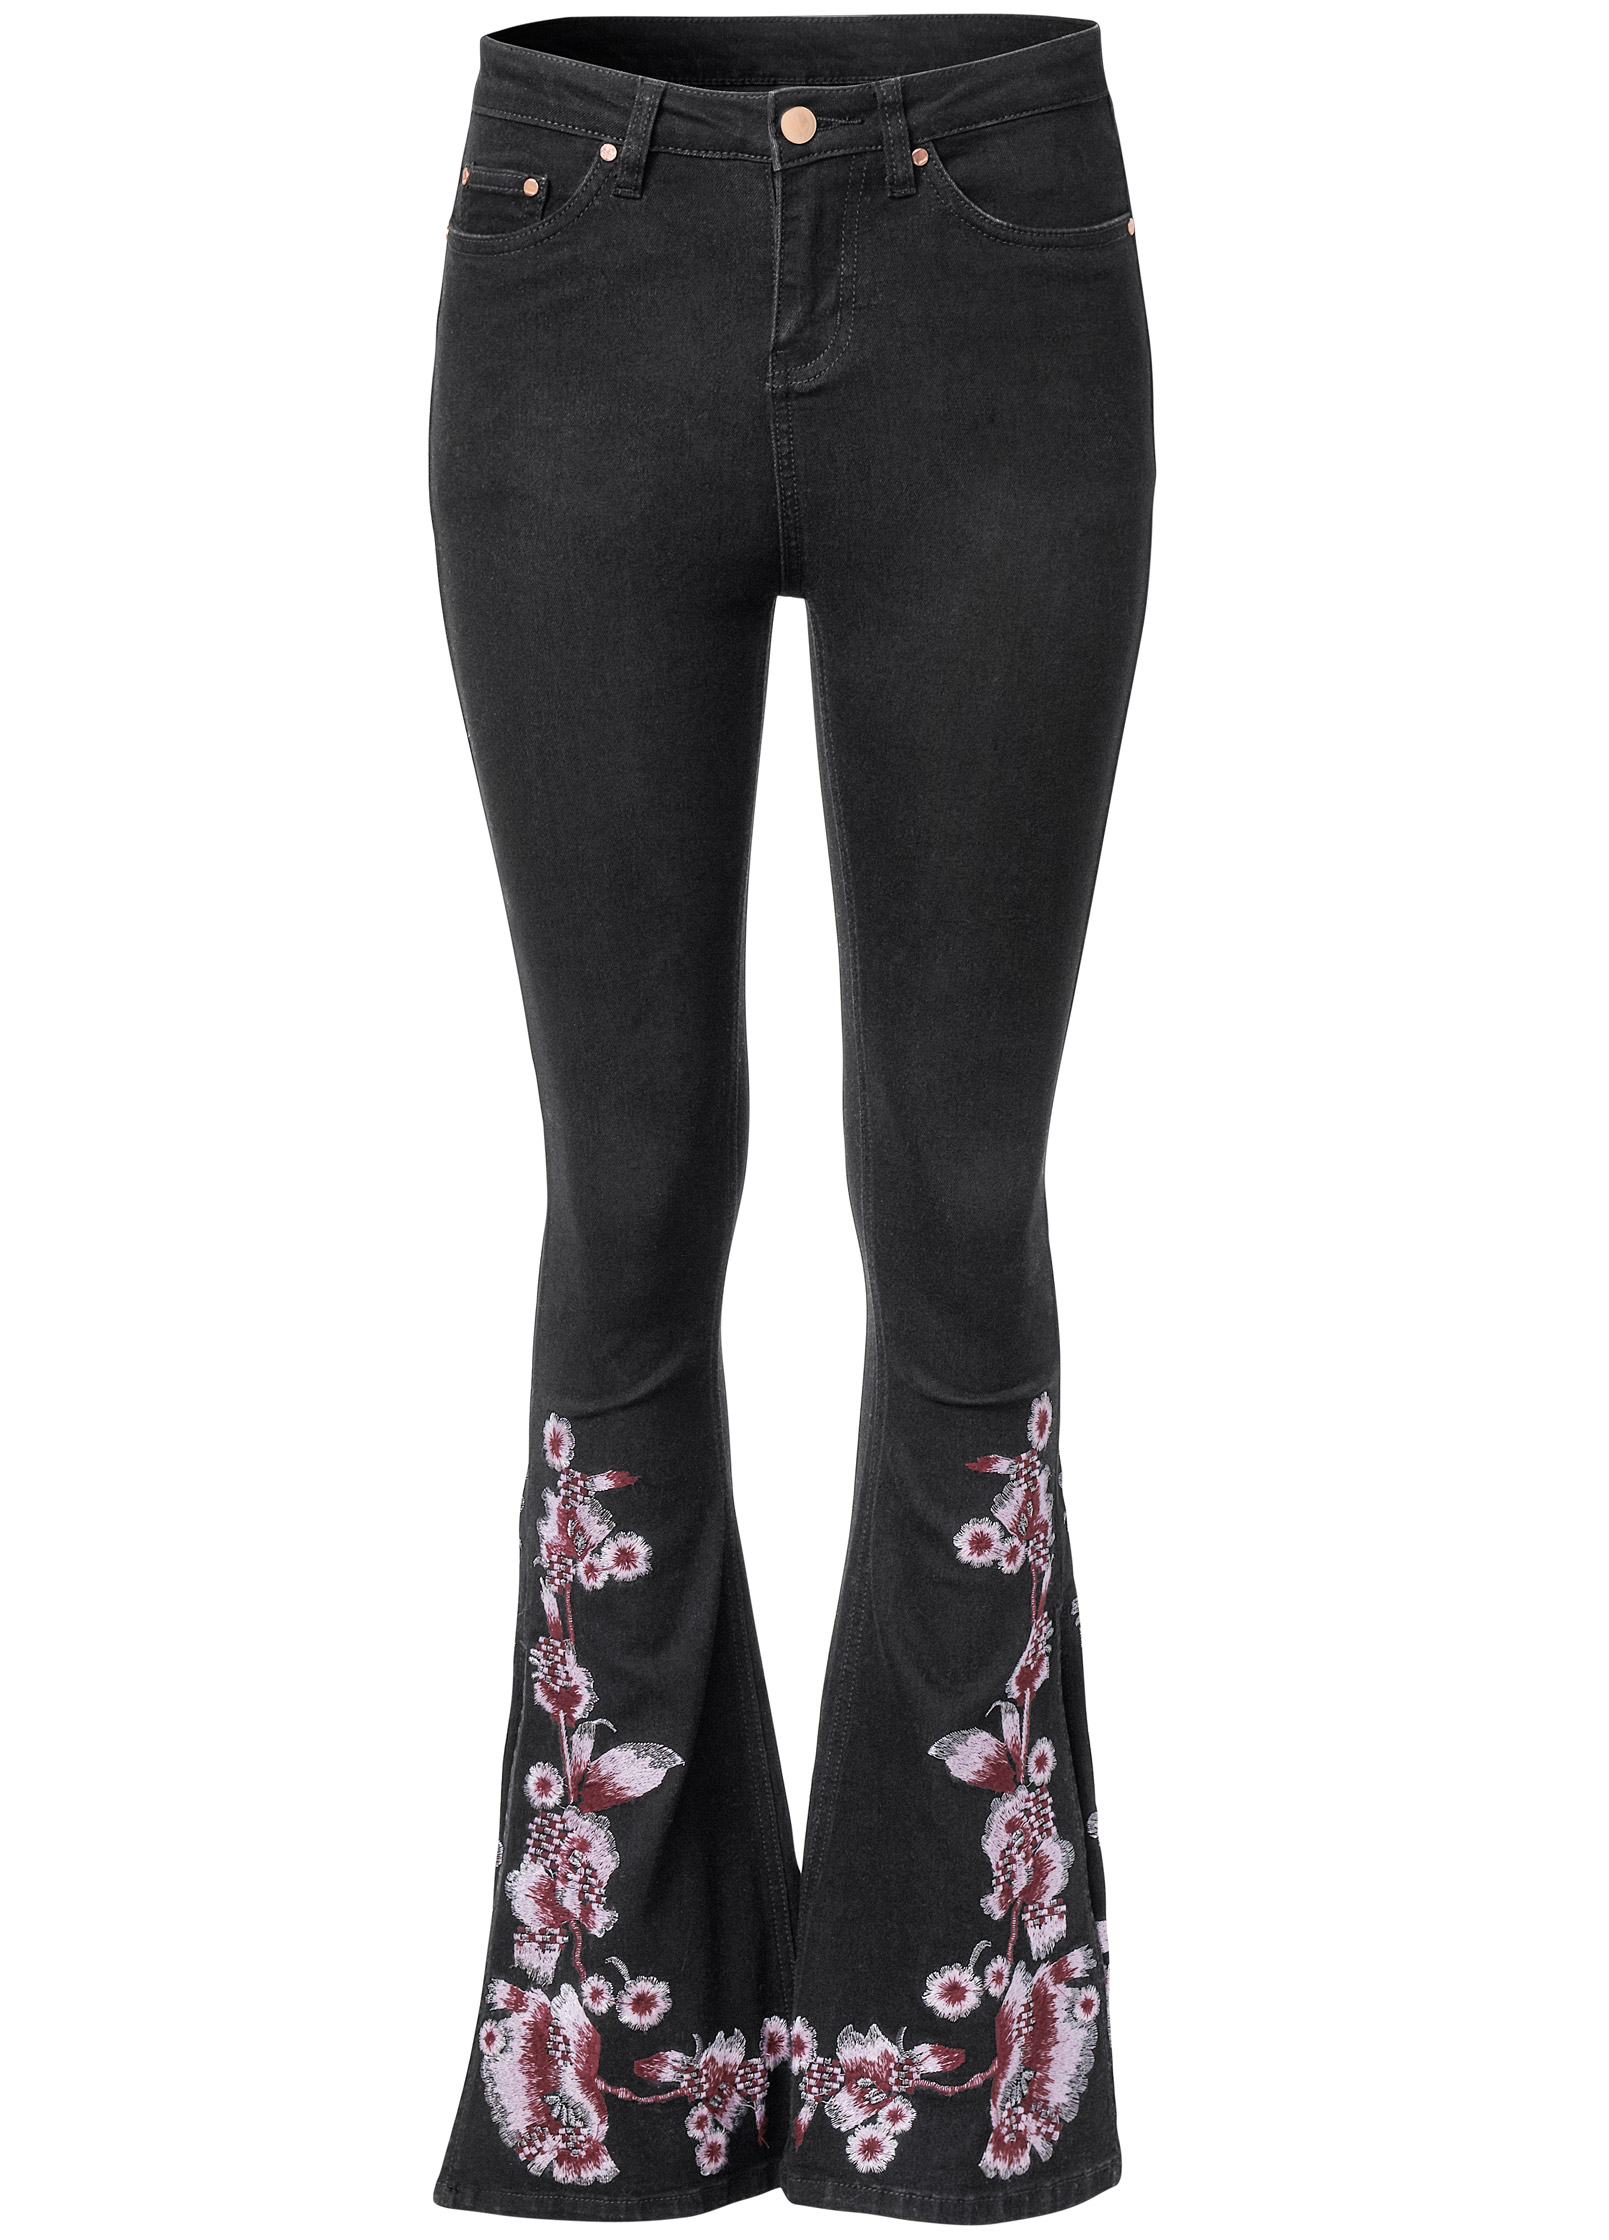 Slit Flare Floral Jeans in Black Denim - Denim | VENUS